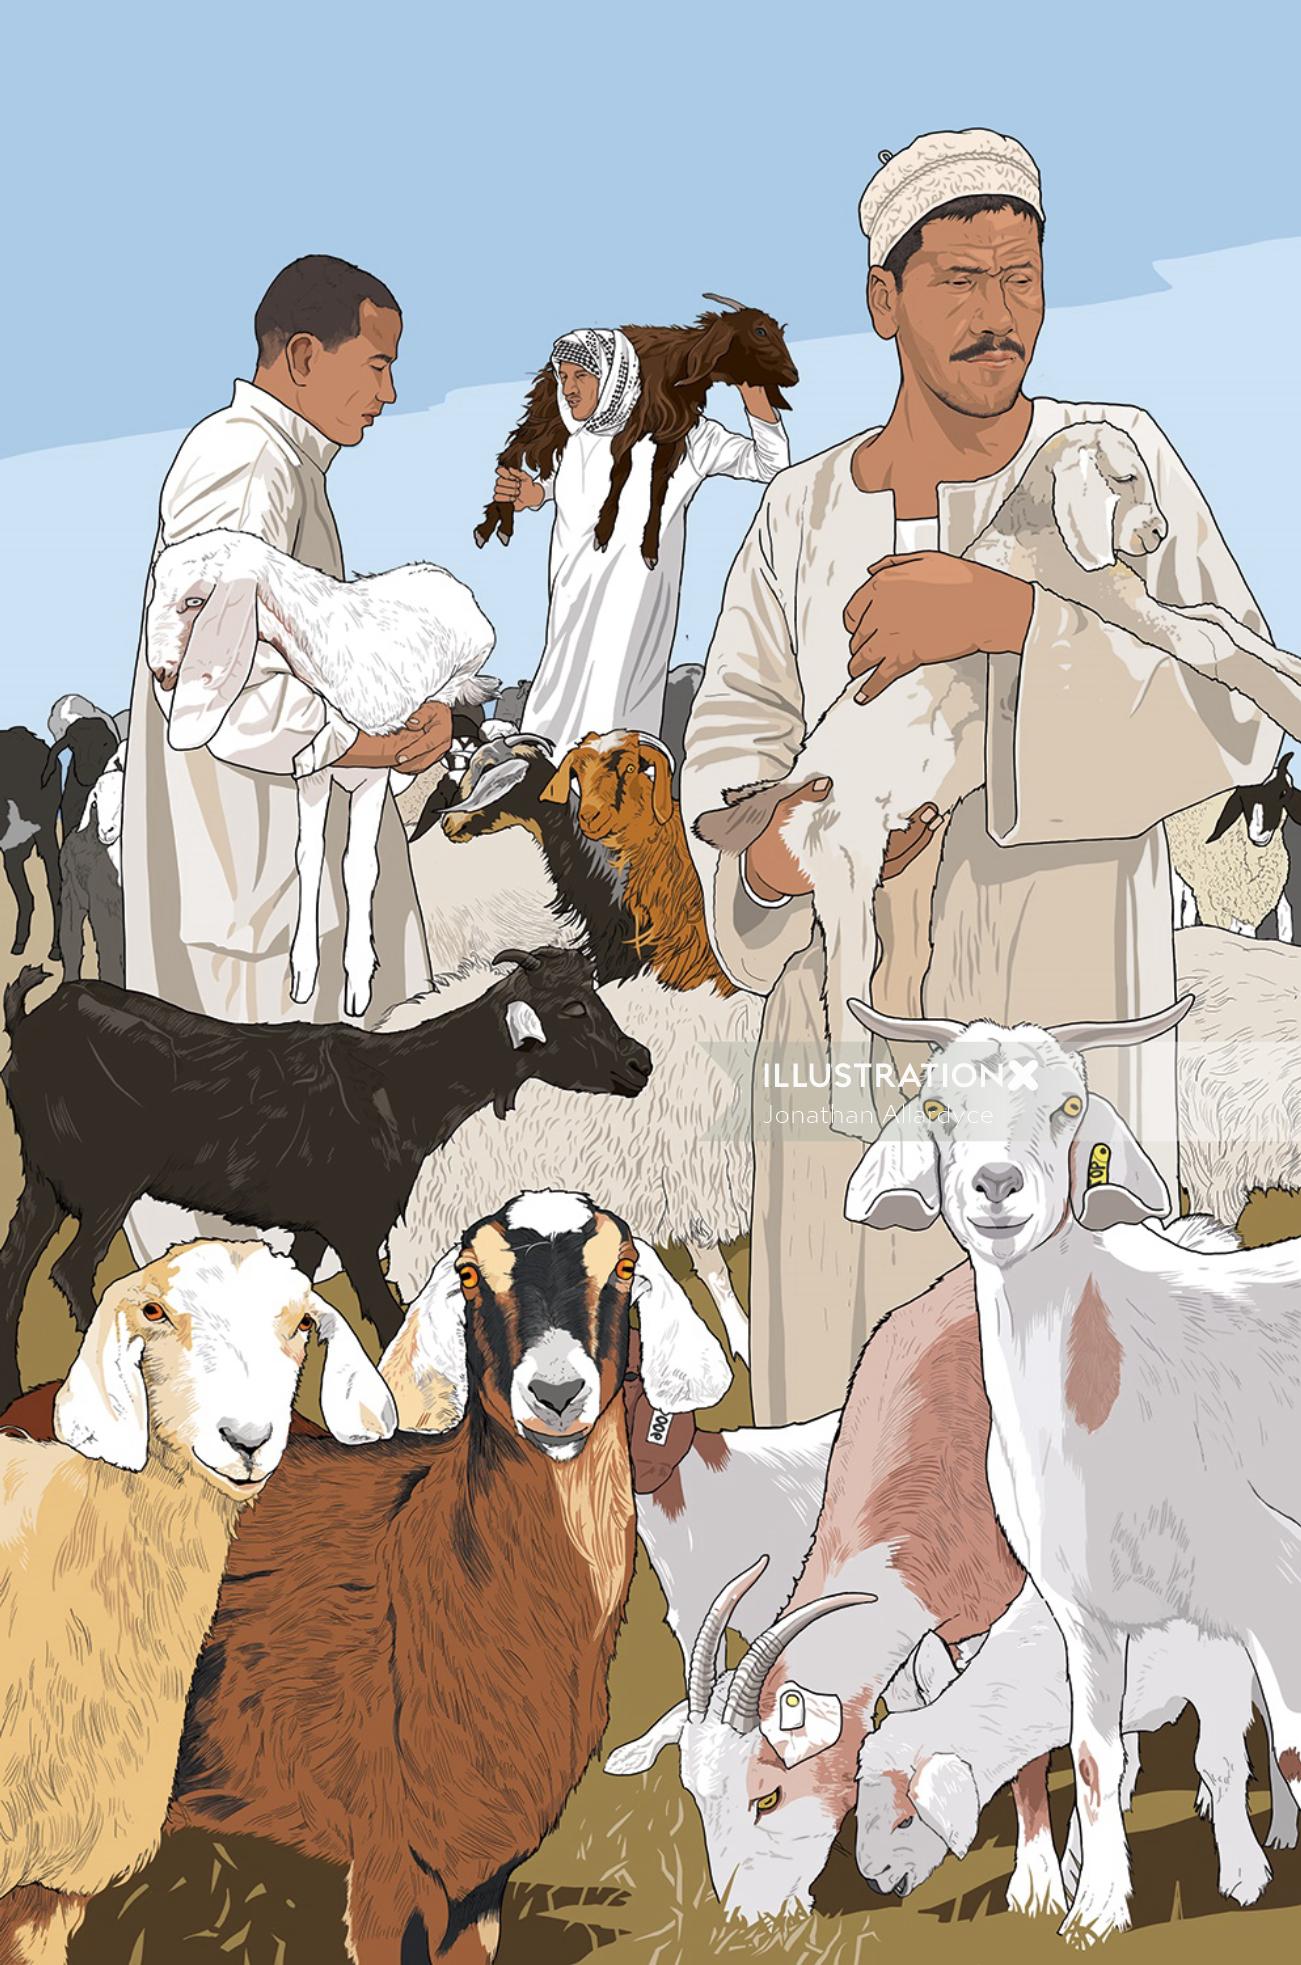 Lamb, Sheep market illustration